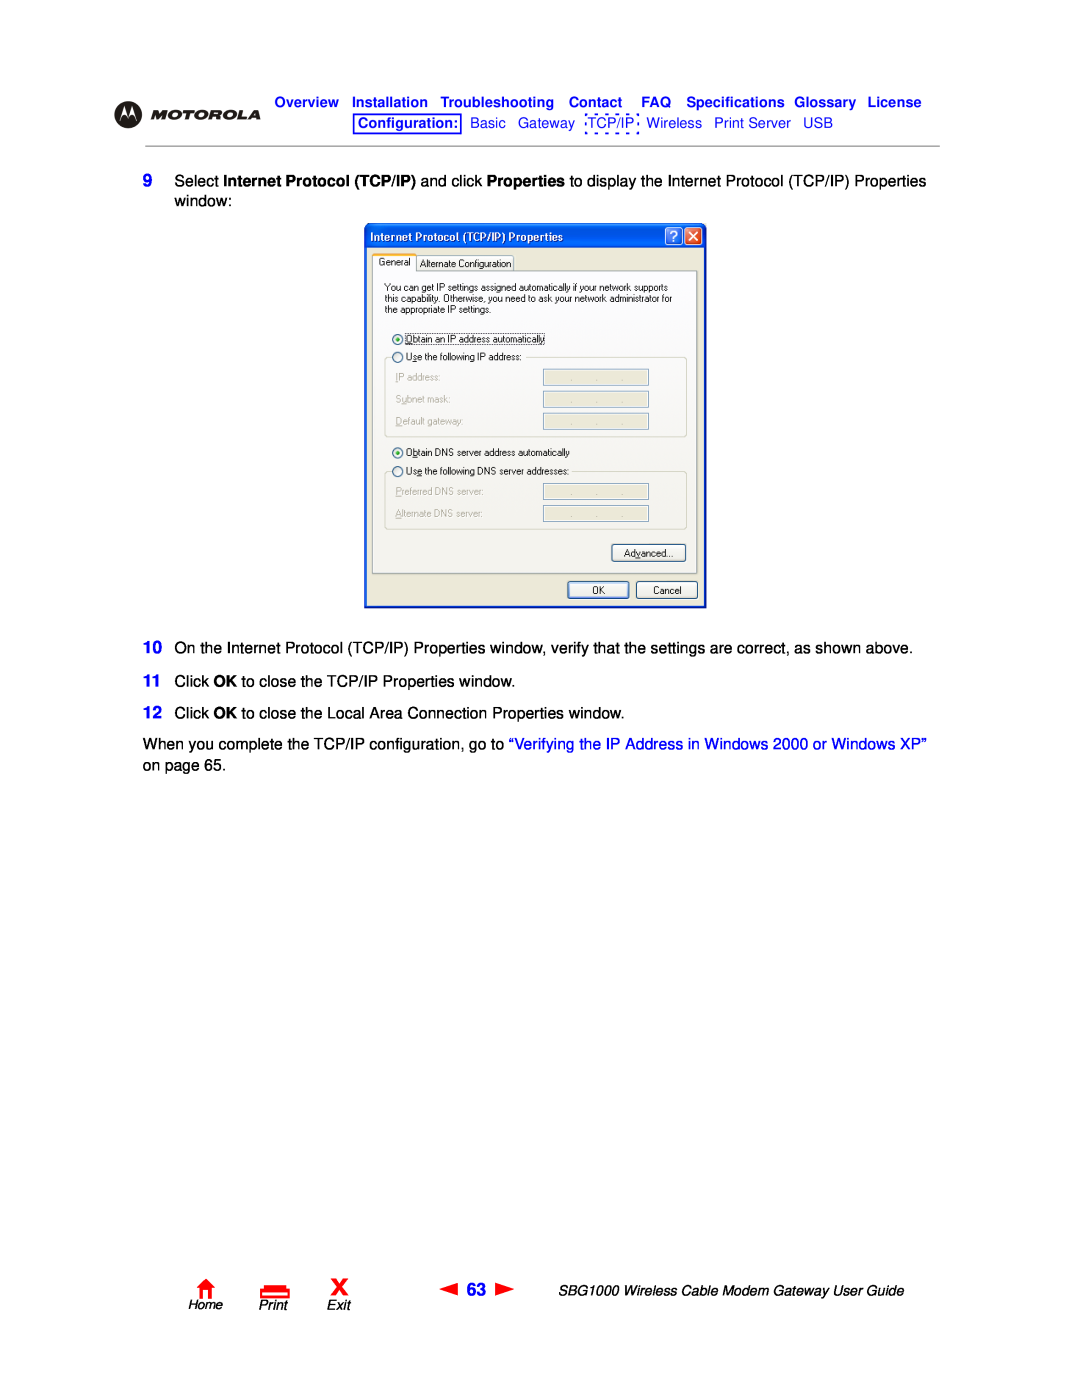 Motorola SBG1000 manual Click OK to close the TCP/IP Properties window 